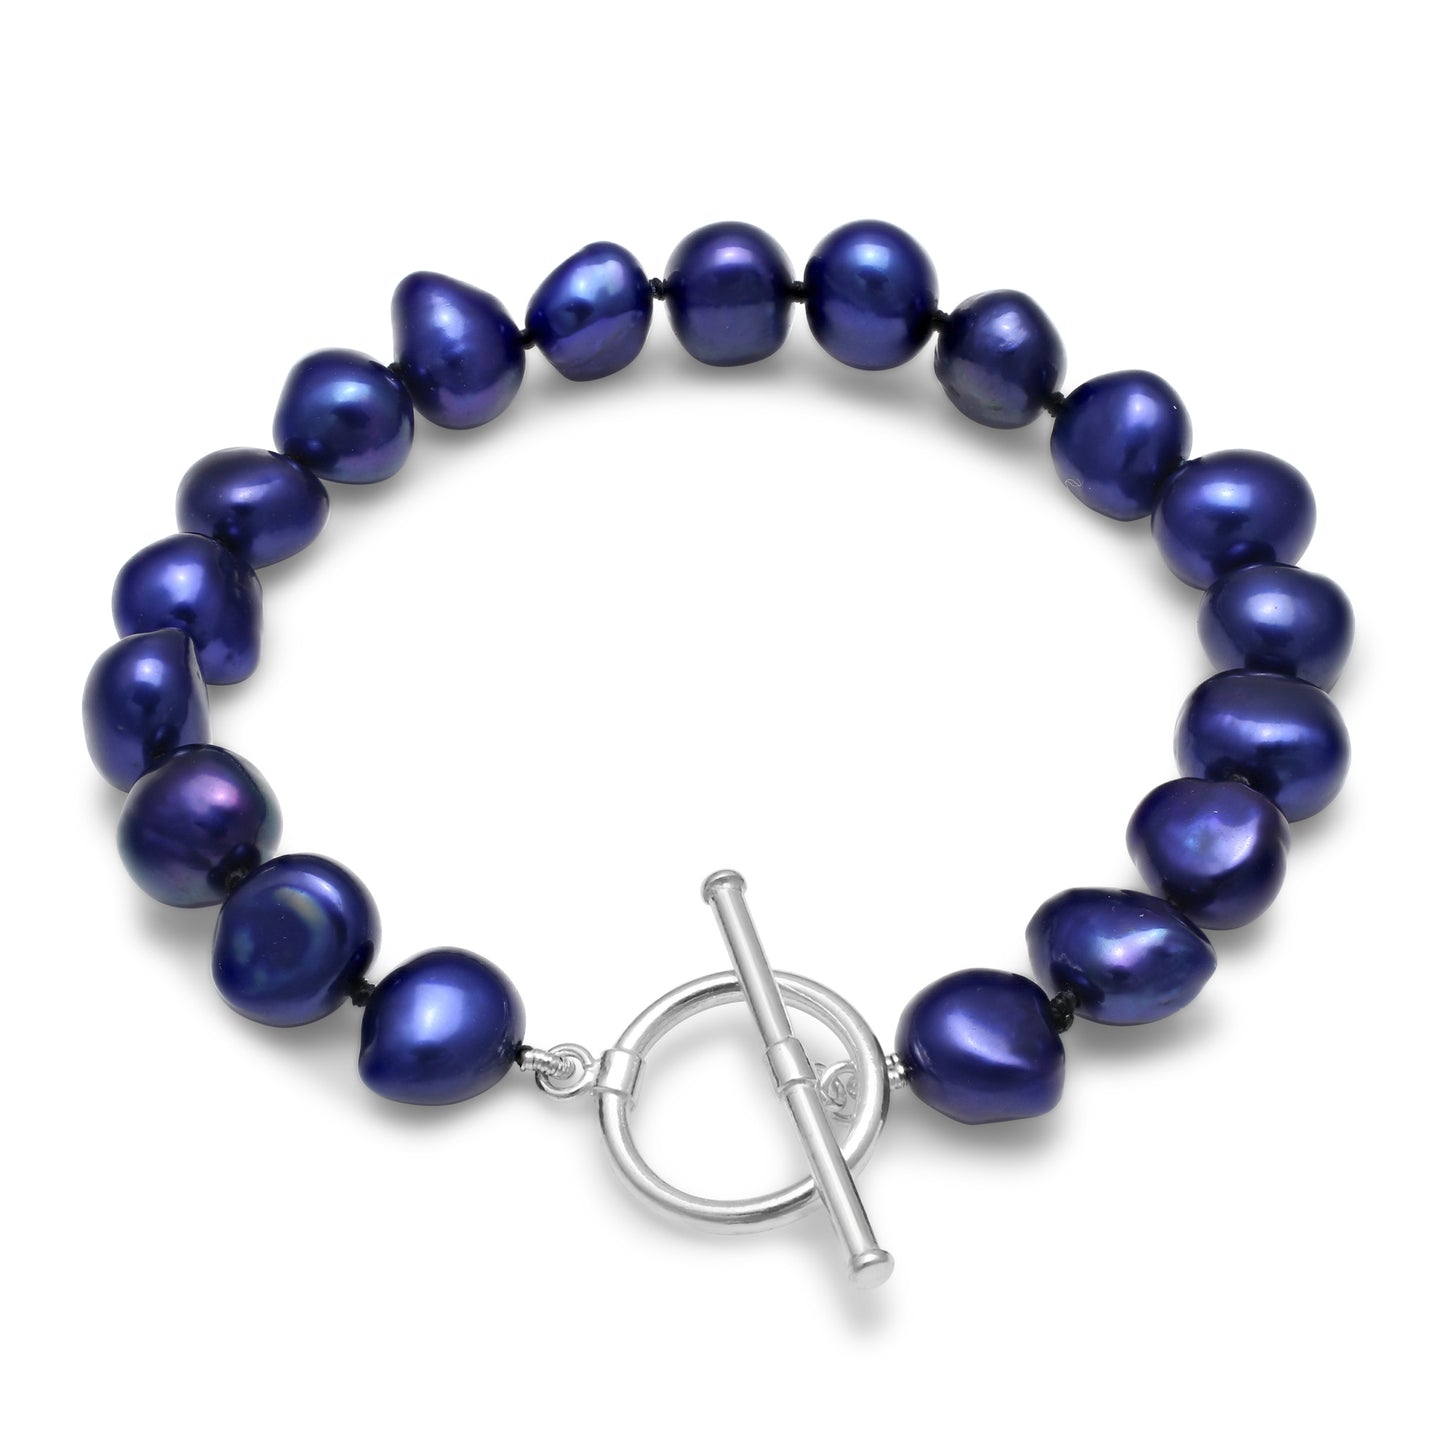 Margarita navy blue cultured freshwater pearl bracelet